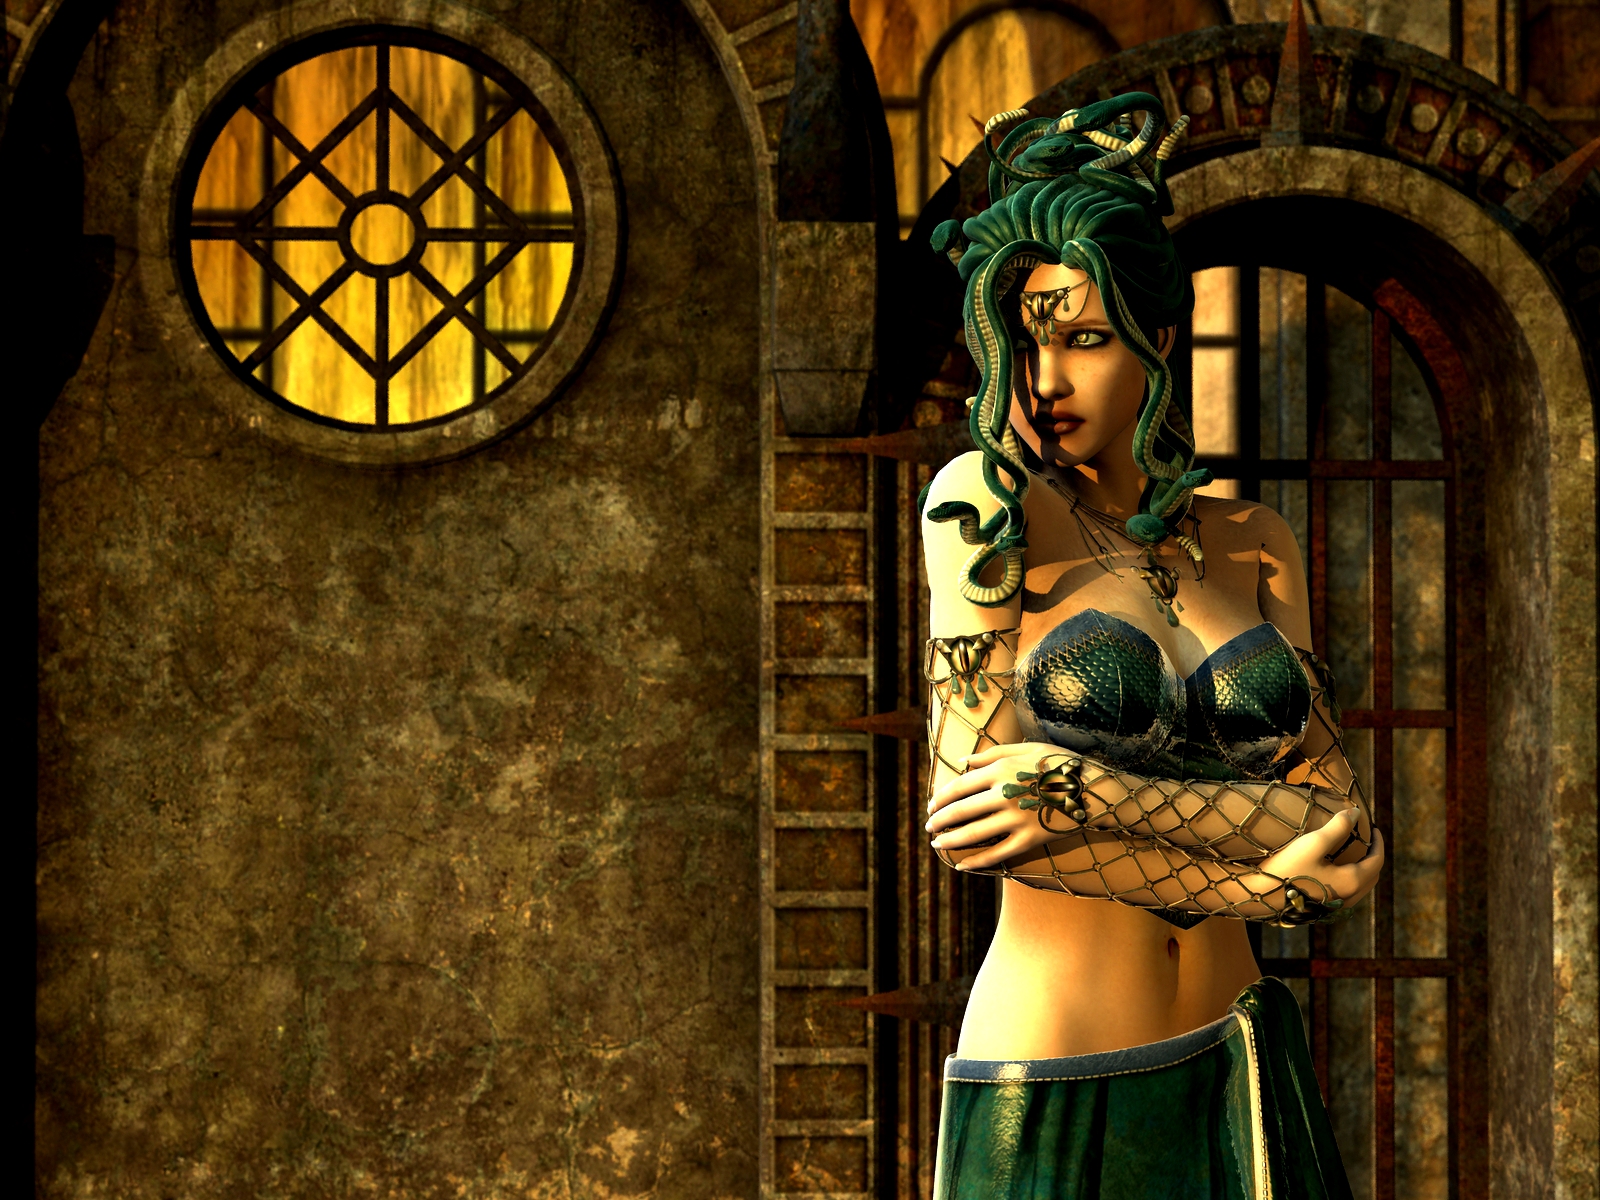 Dark fantasy artwork featuring Medusa, a menacing figure with serpentine hair.